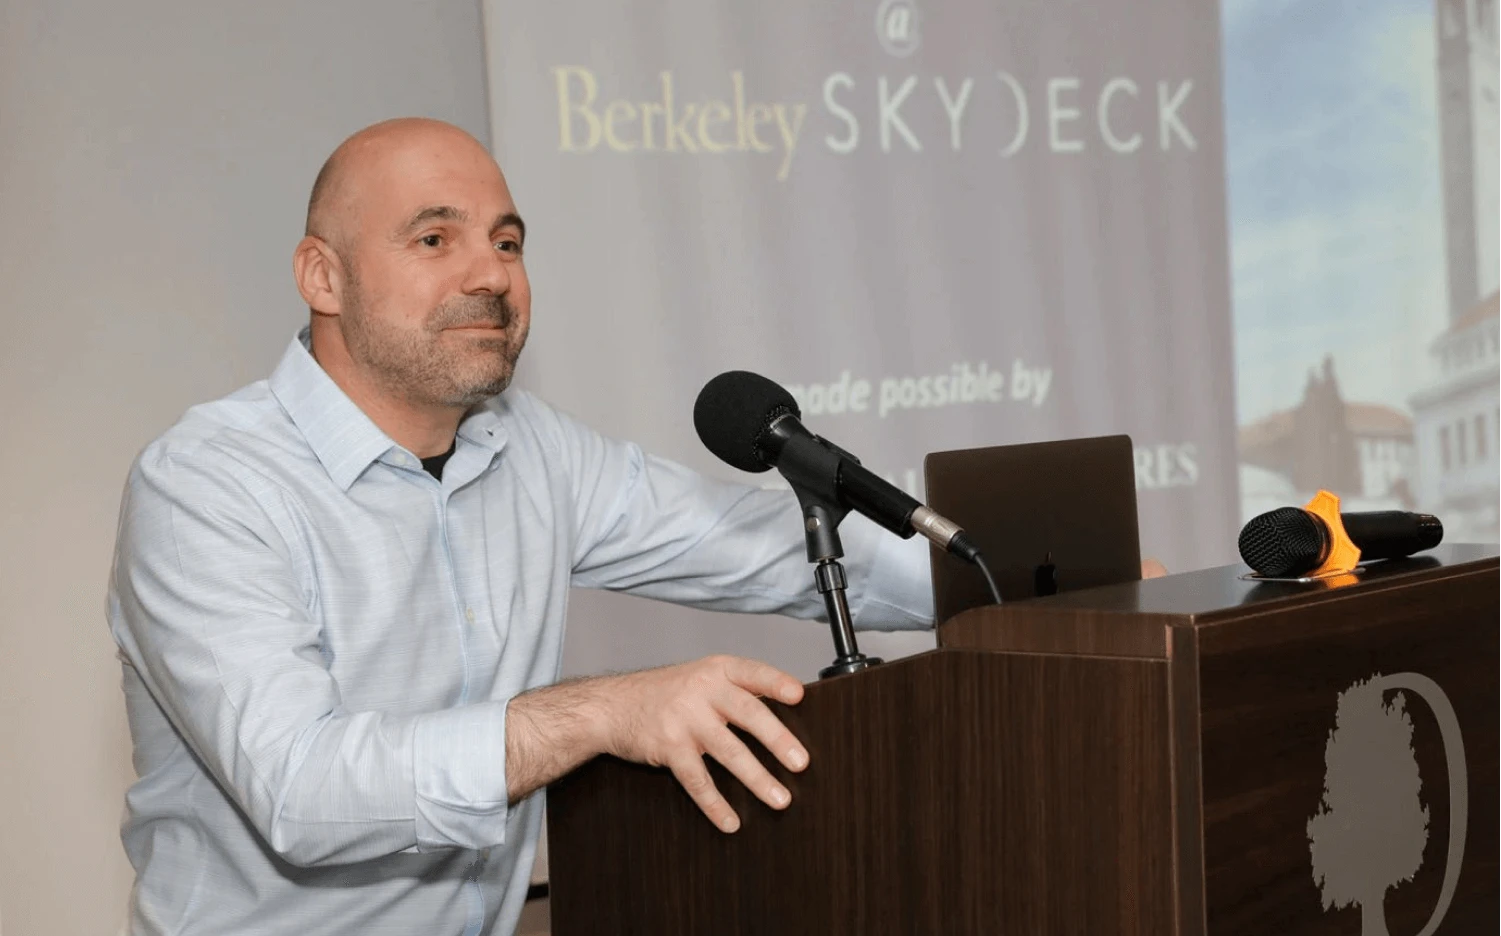 Ucraft at Berkeley SkyDeck Accelerator Program